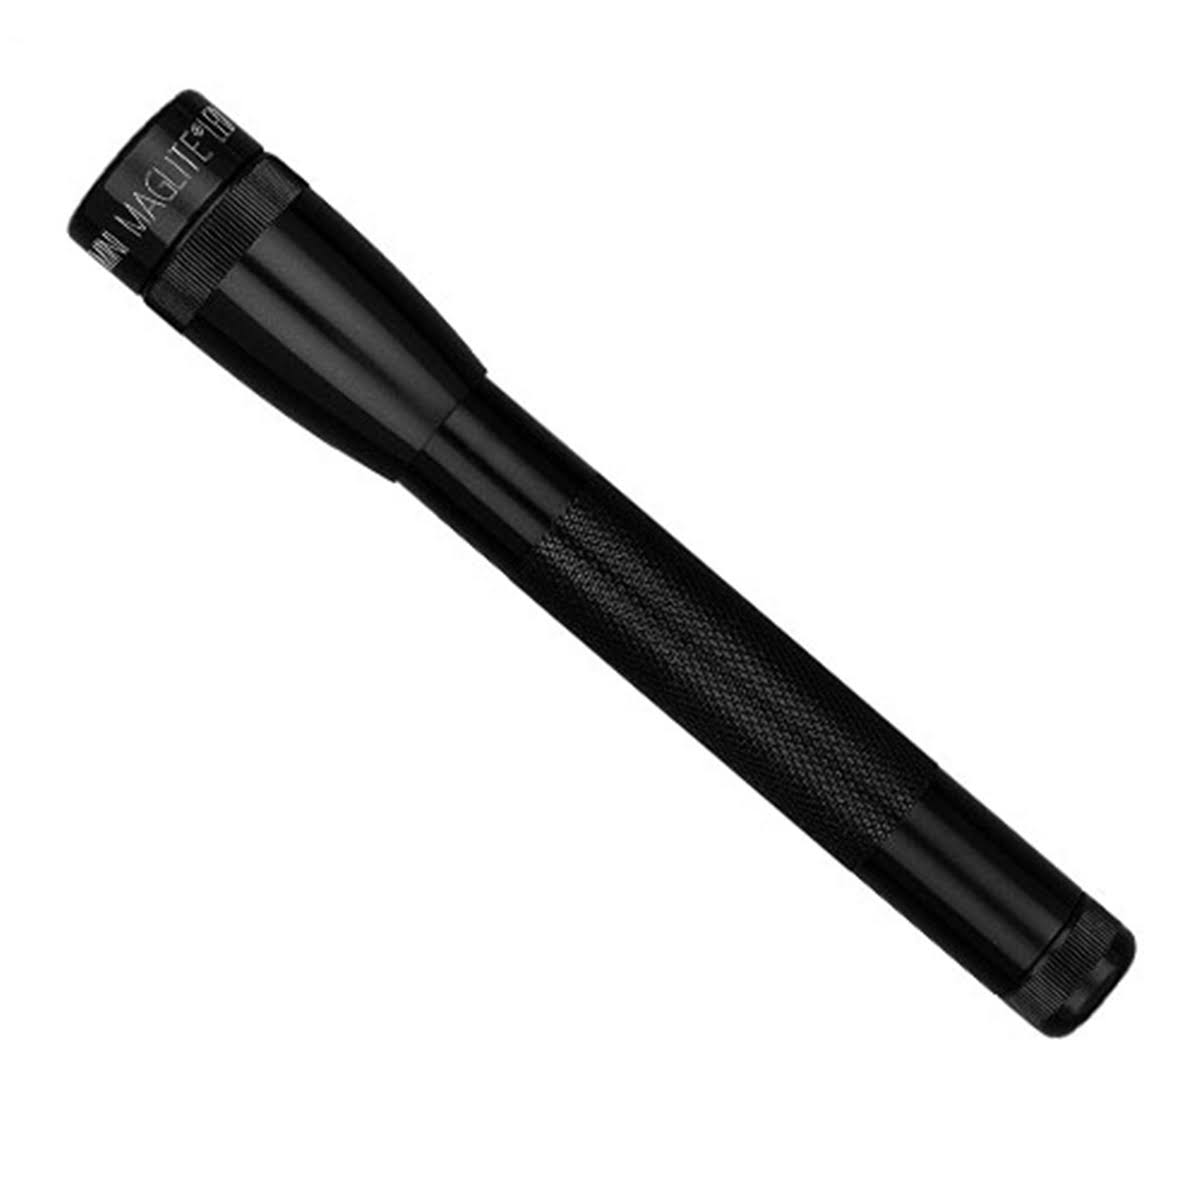 Mini Maglite LED Flashlight - 3W, Black